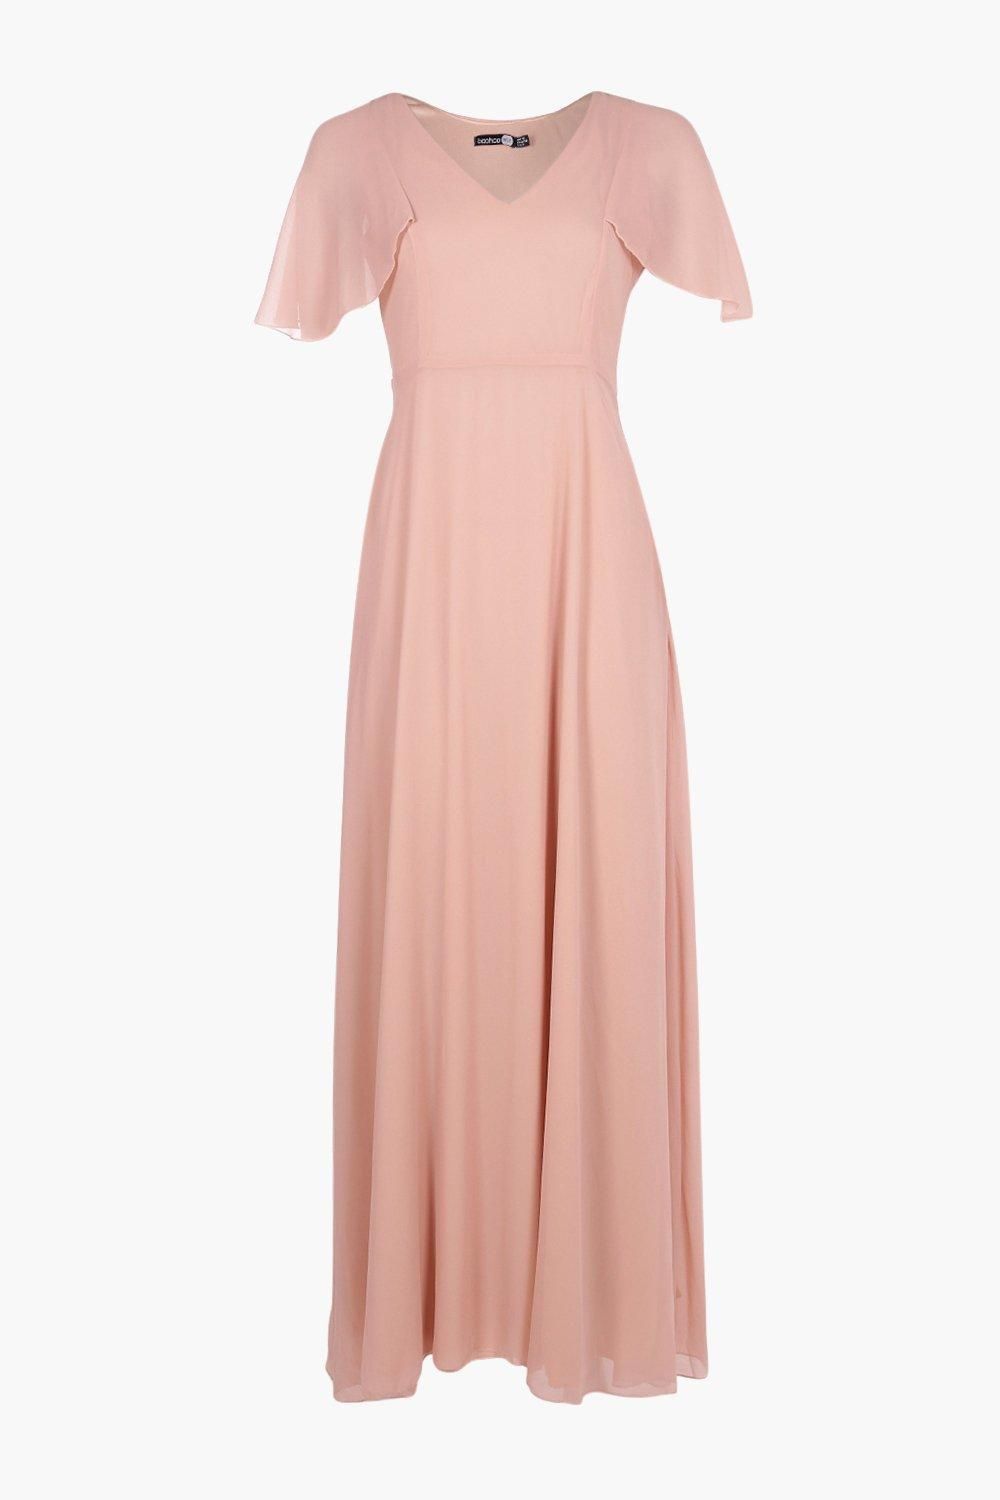 Blush Pink Maxi Dress